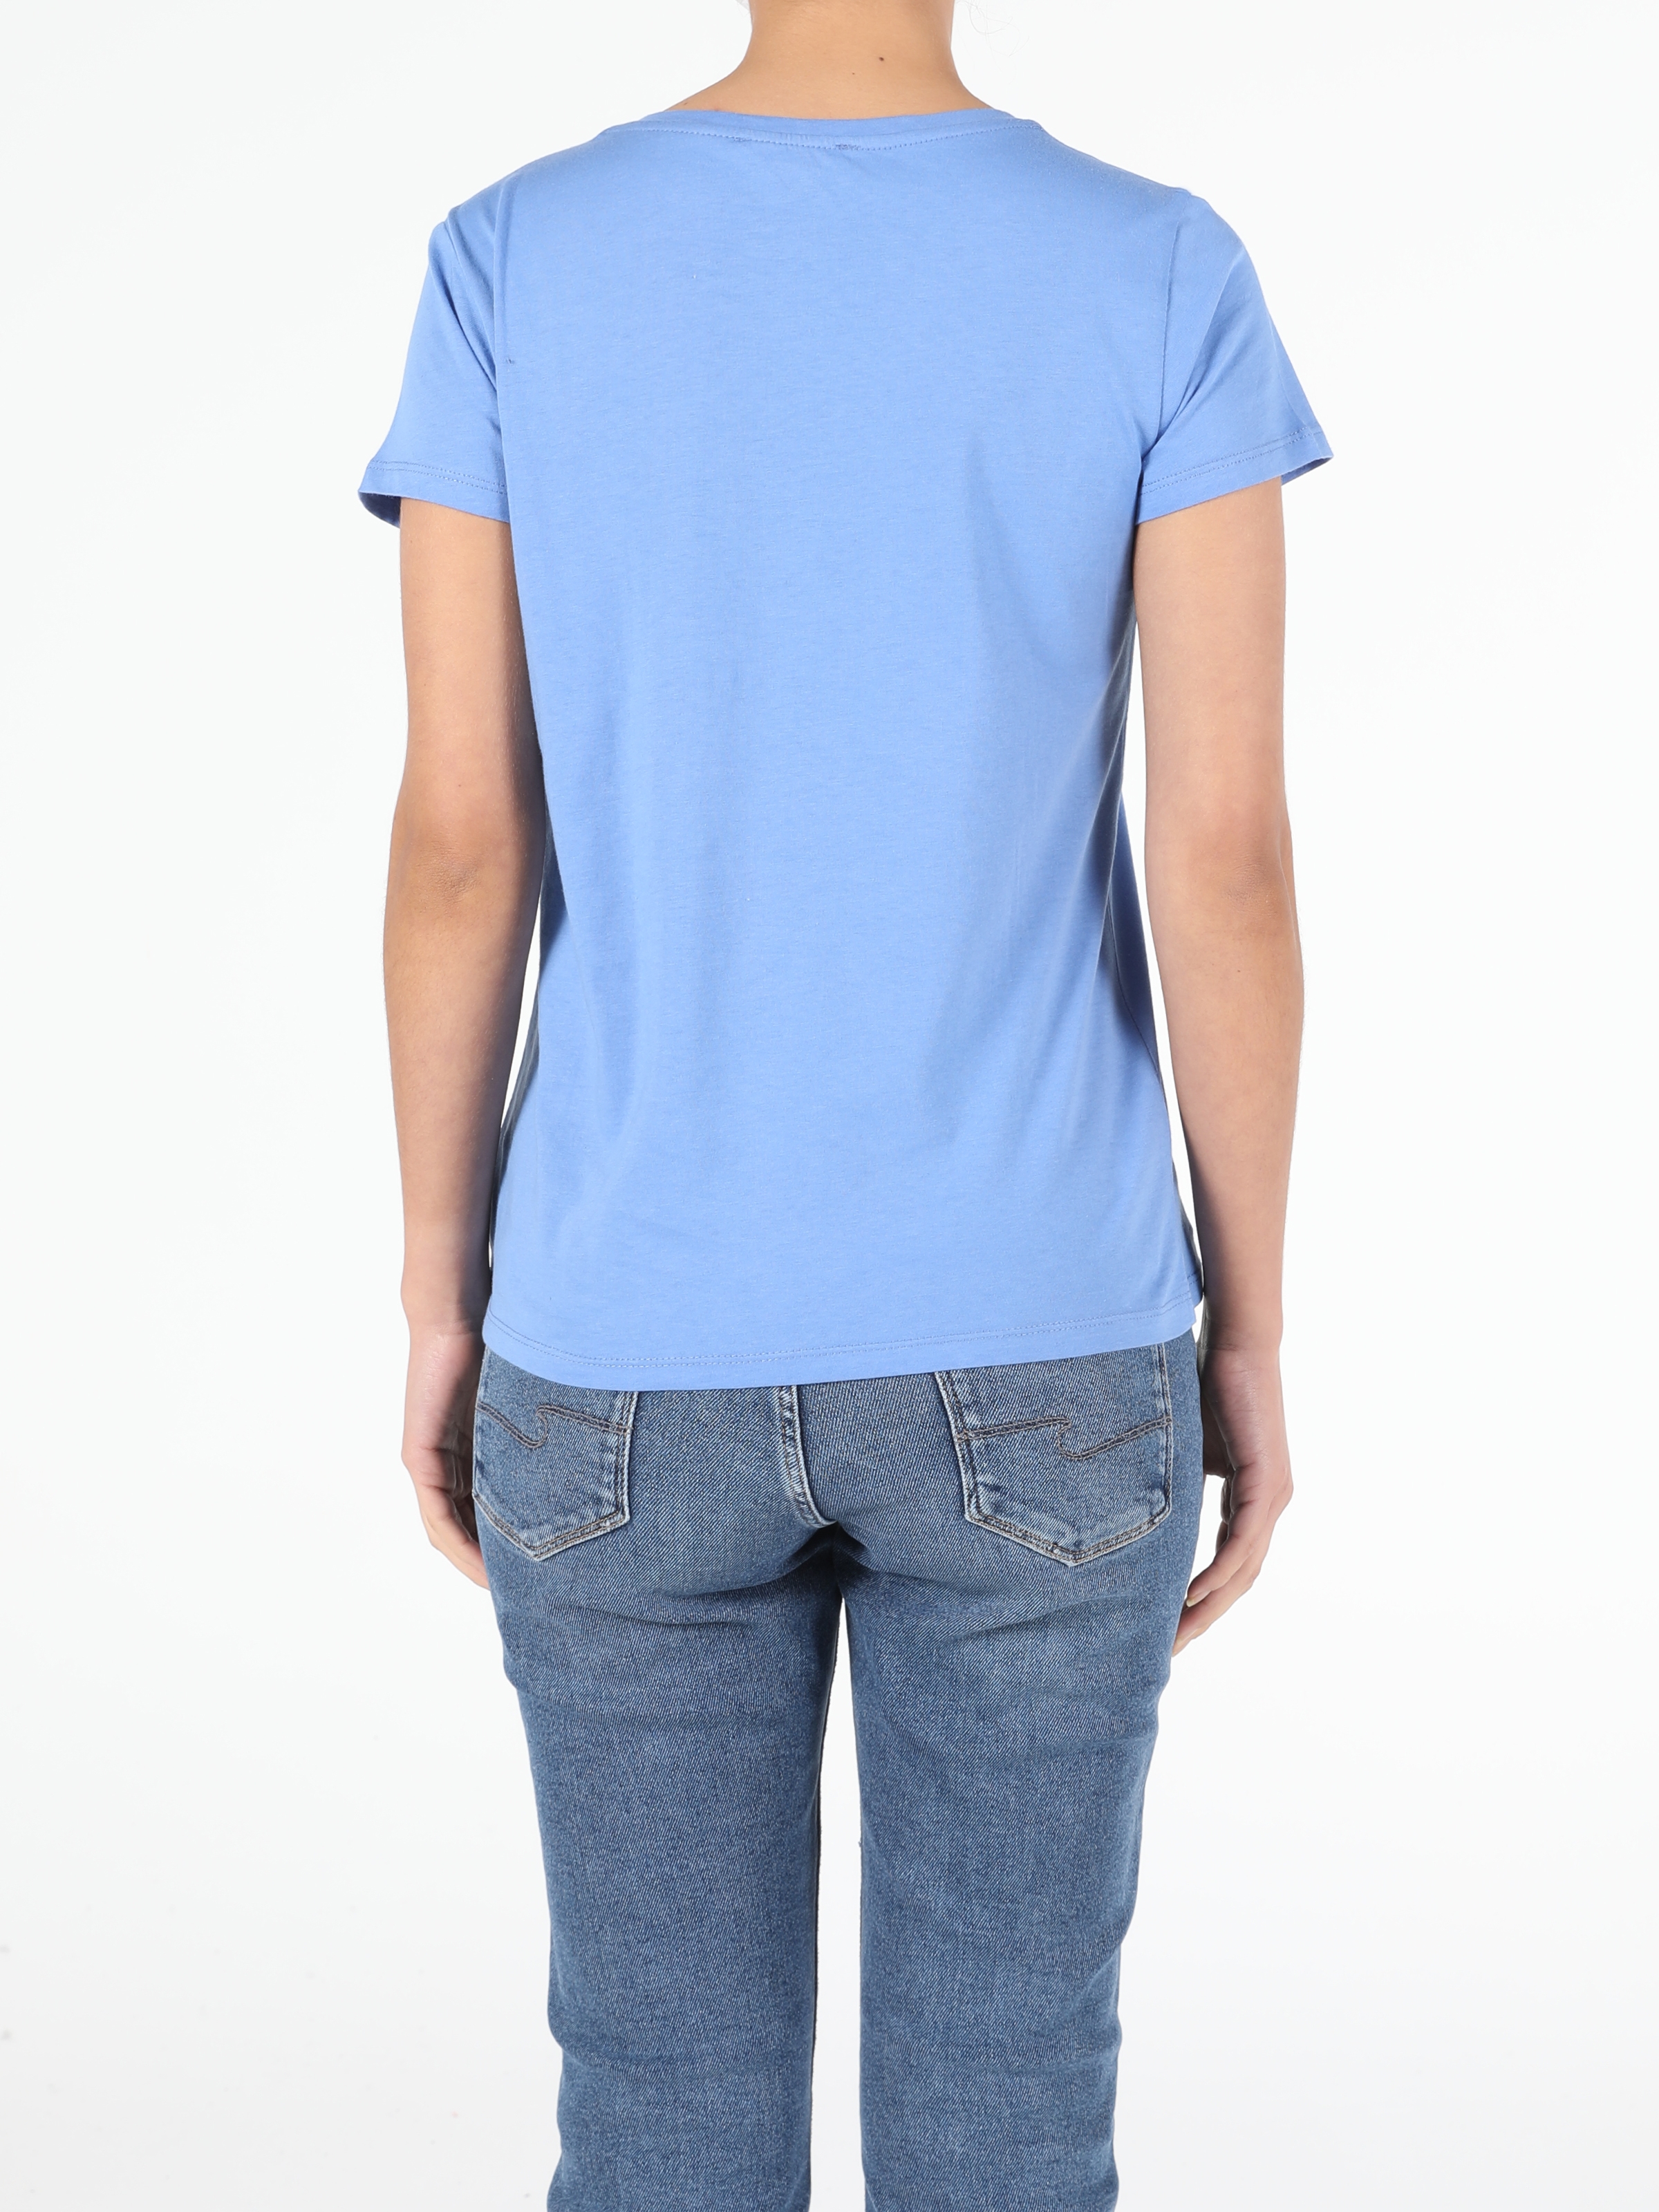 Colins Blue Woman Short Sleeve Tshirt. 2